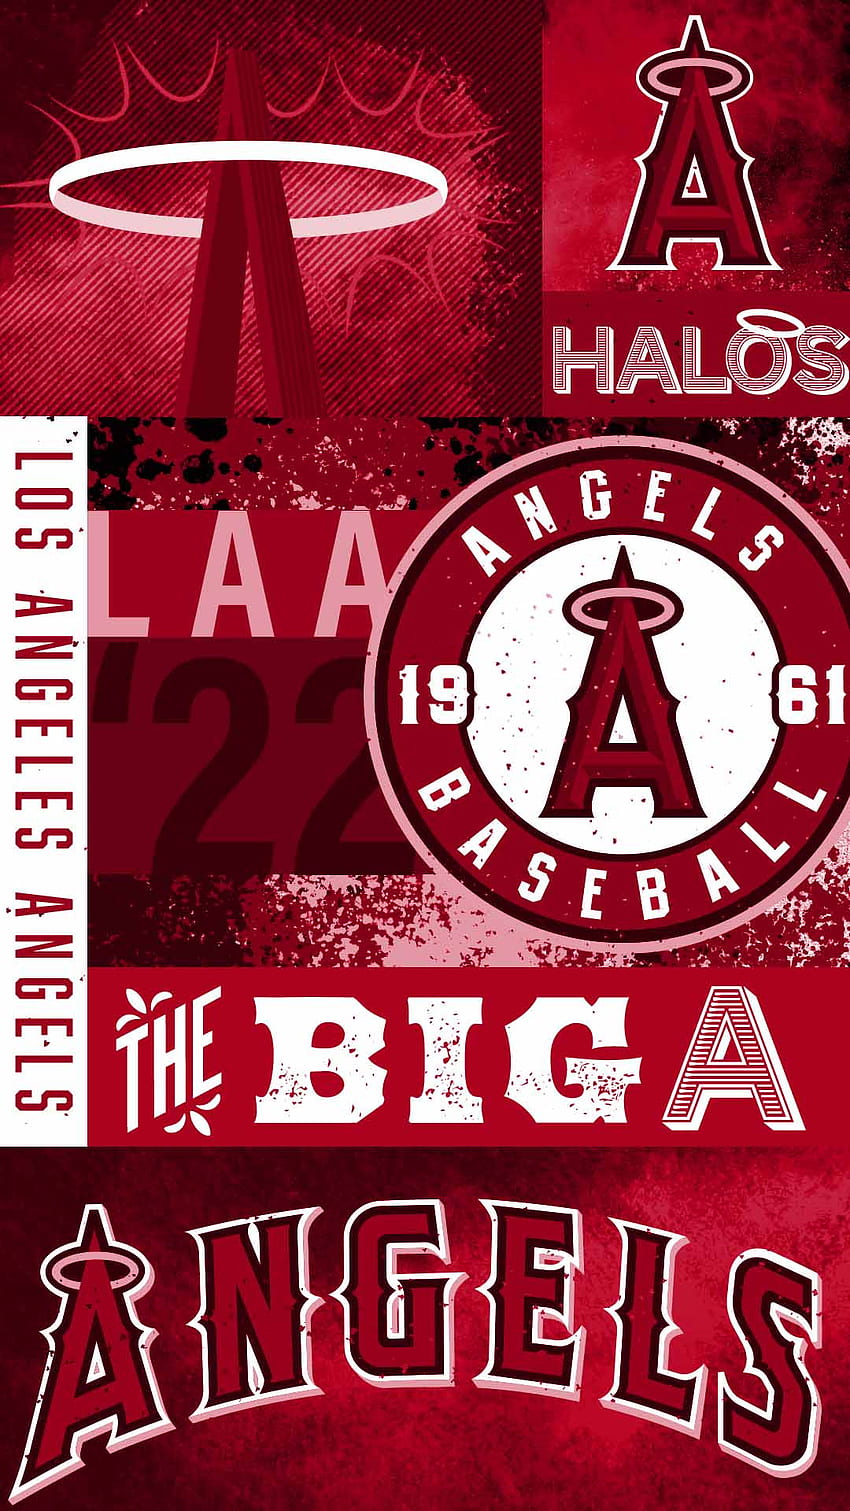 Los Angeles Angels Wallpaper 4K, Baseball team, Blue background